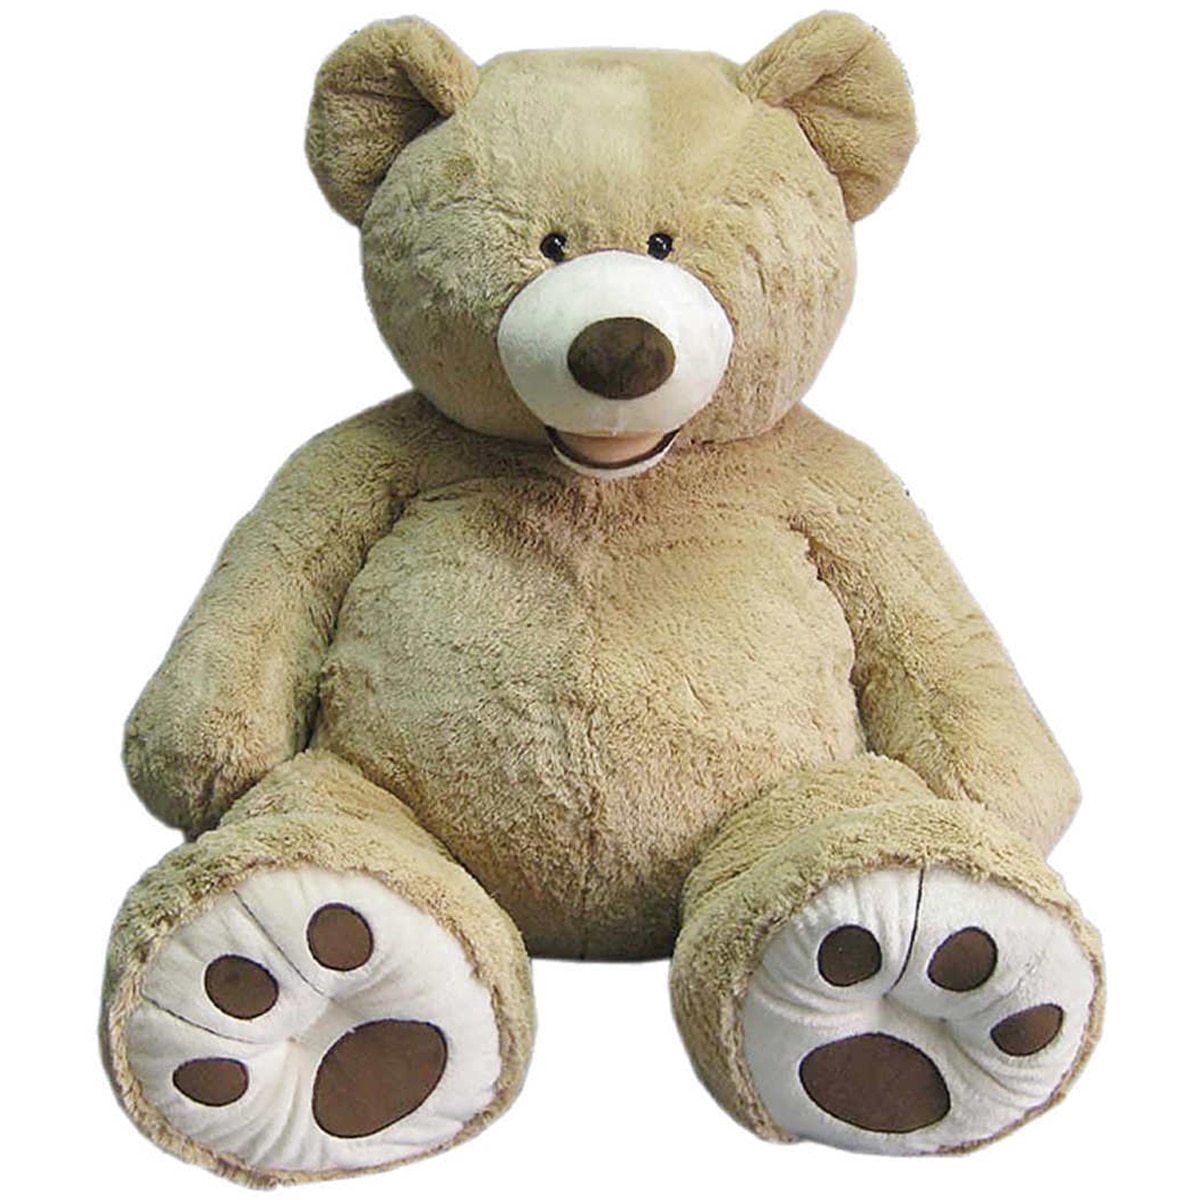 giant teddy bear reject shop